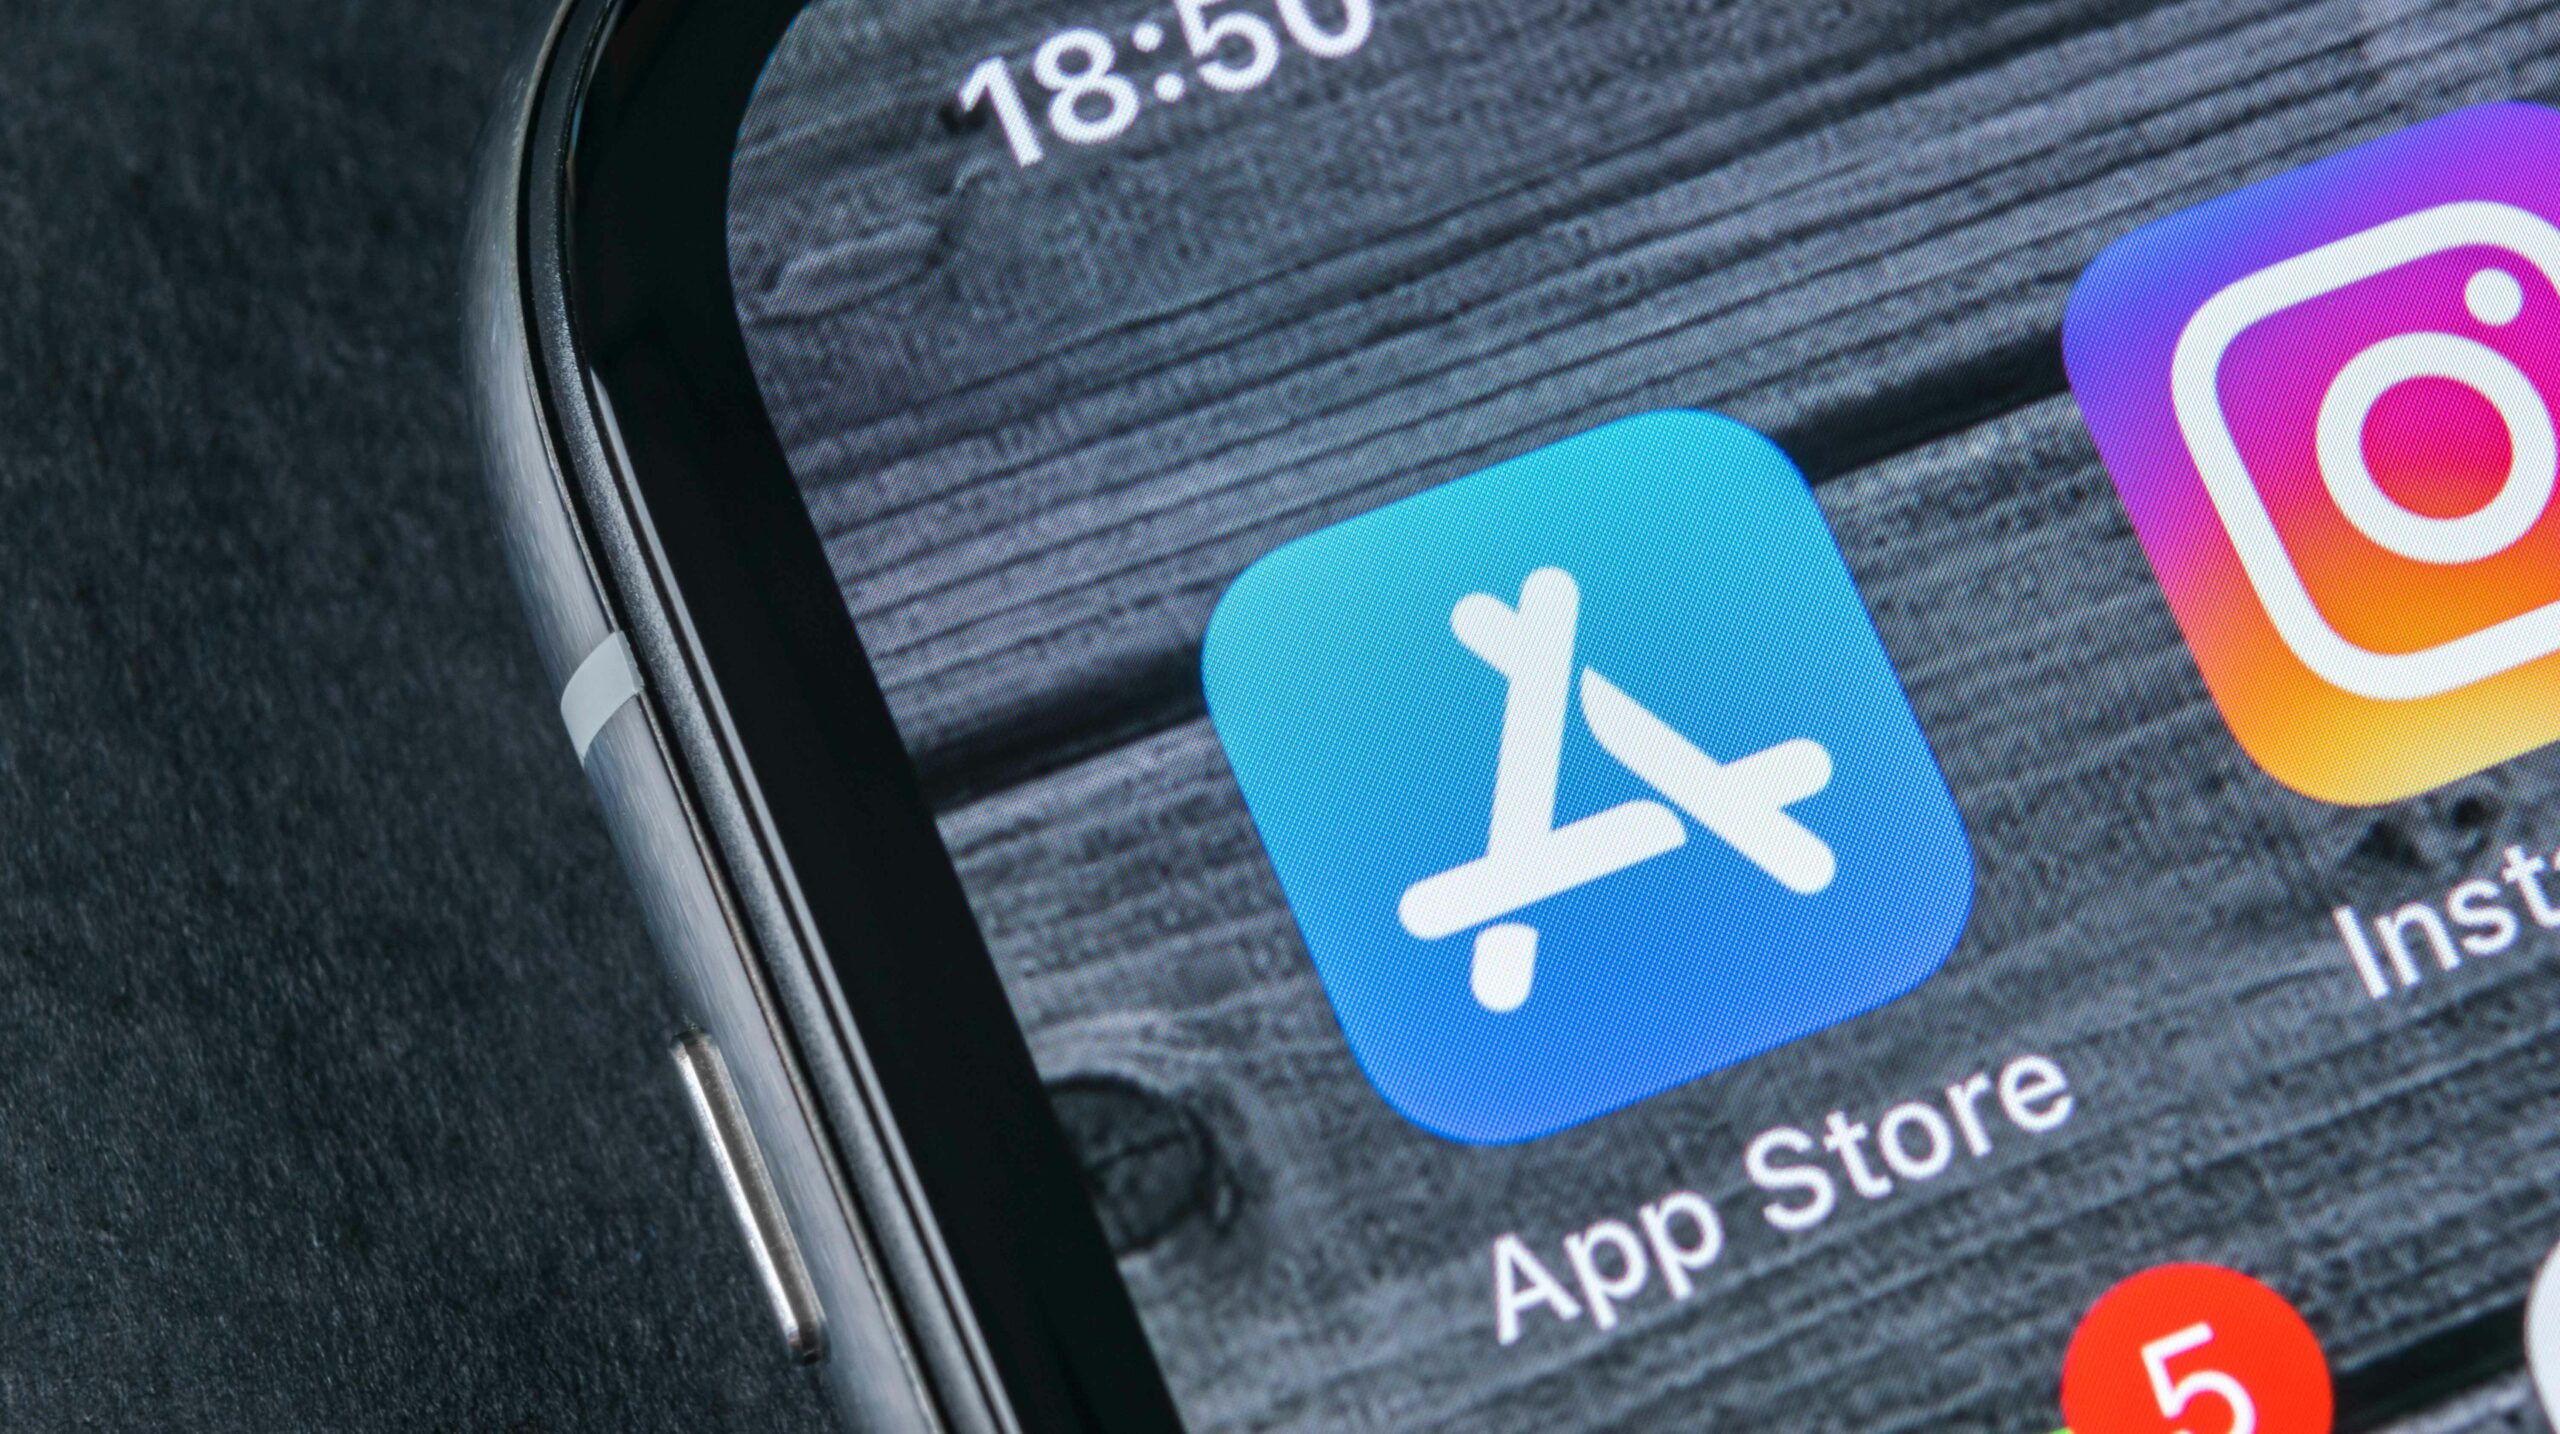 App Store app on home screen